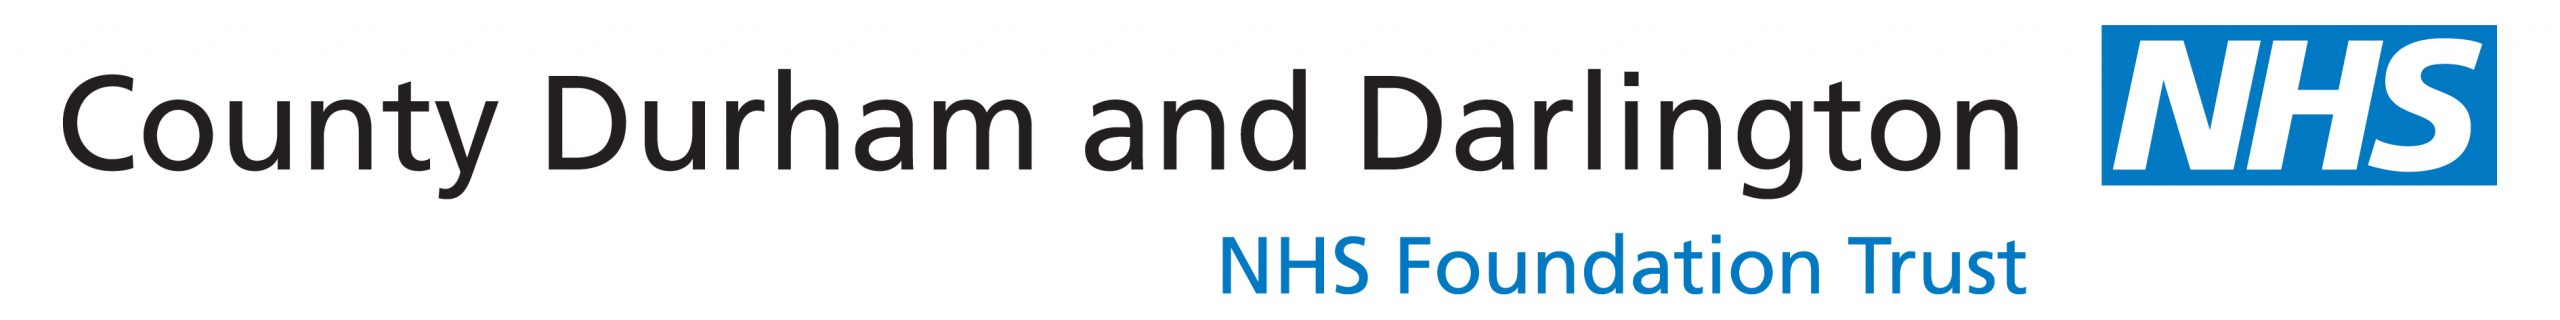 CoDurham-NHS-Foundation-Trust-logo-Colour1